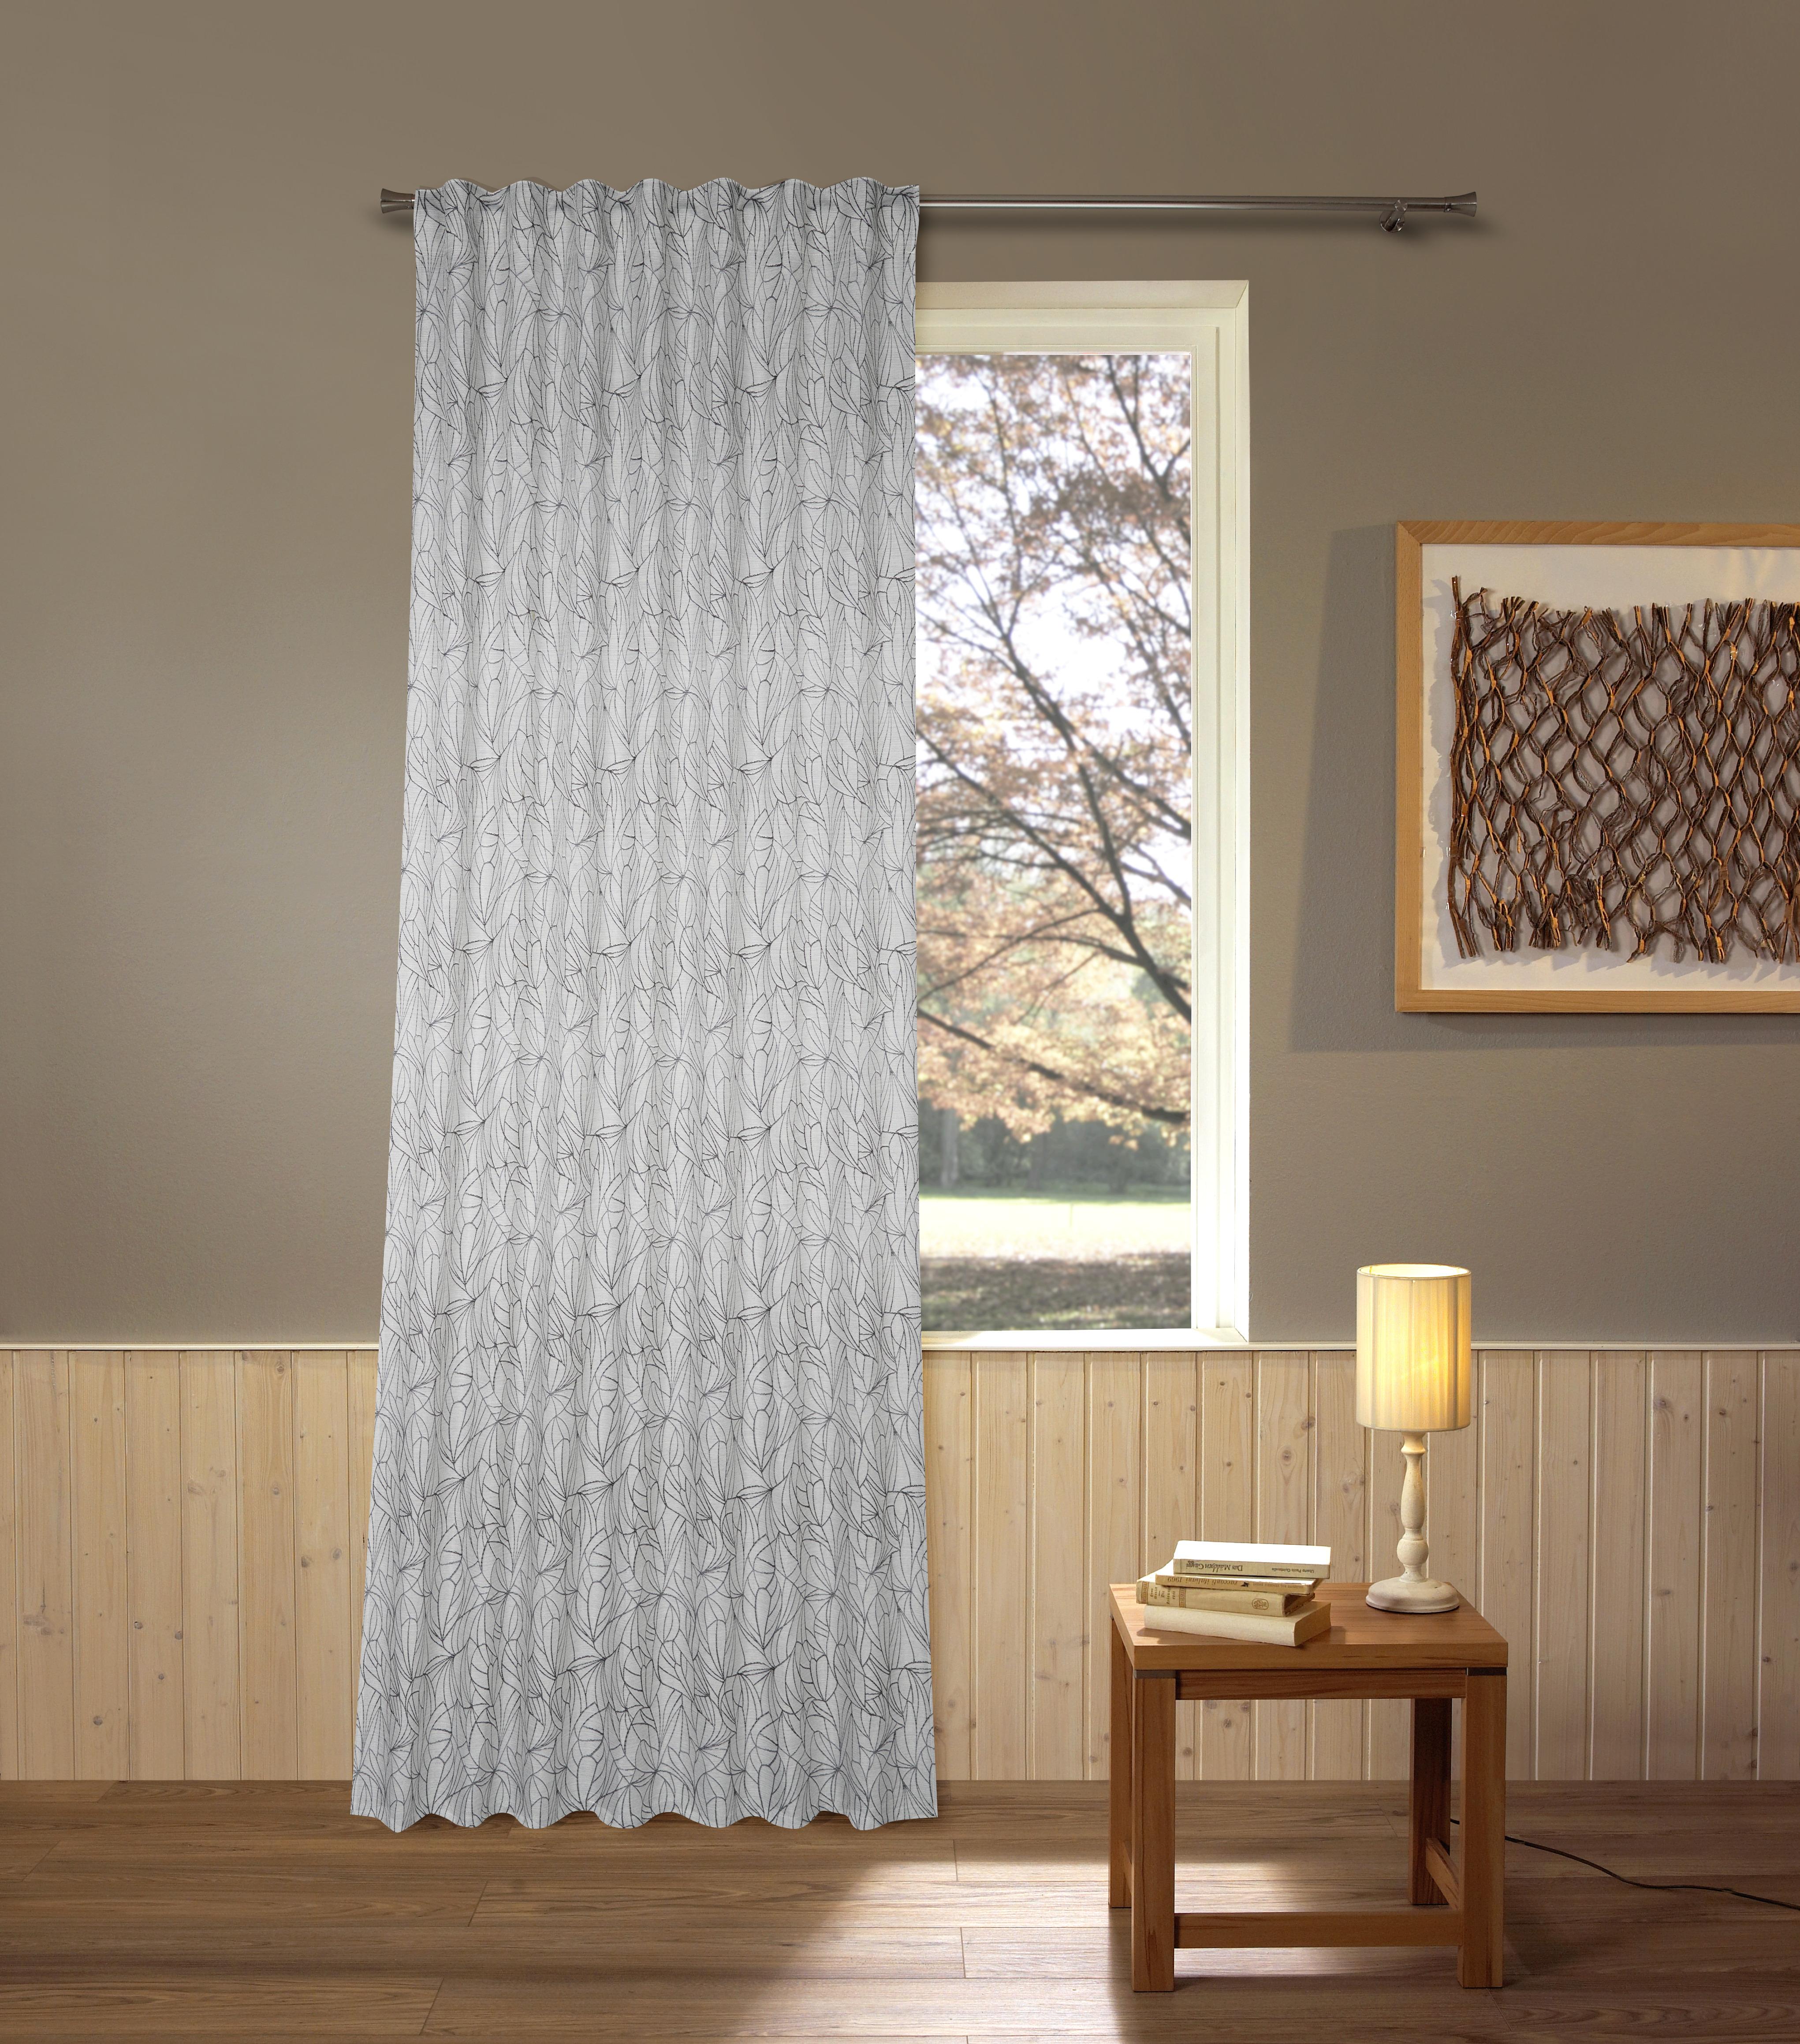 Készfüggöny Blanka - Antracit/Ezüst, romantikus/Landhaus, Textil (140/245cm) - James Wood